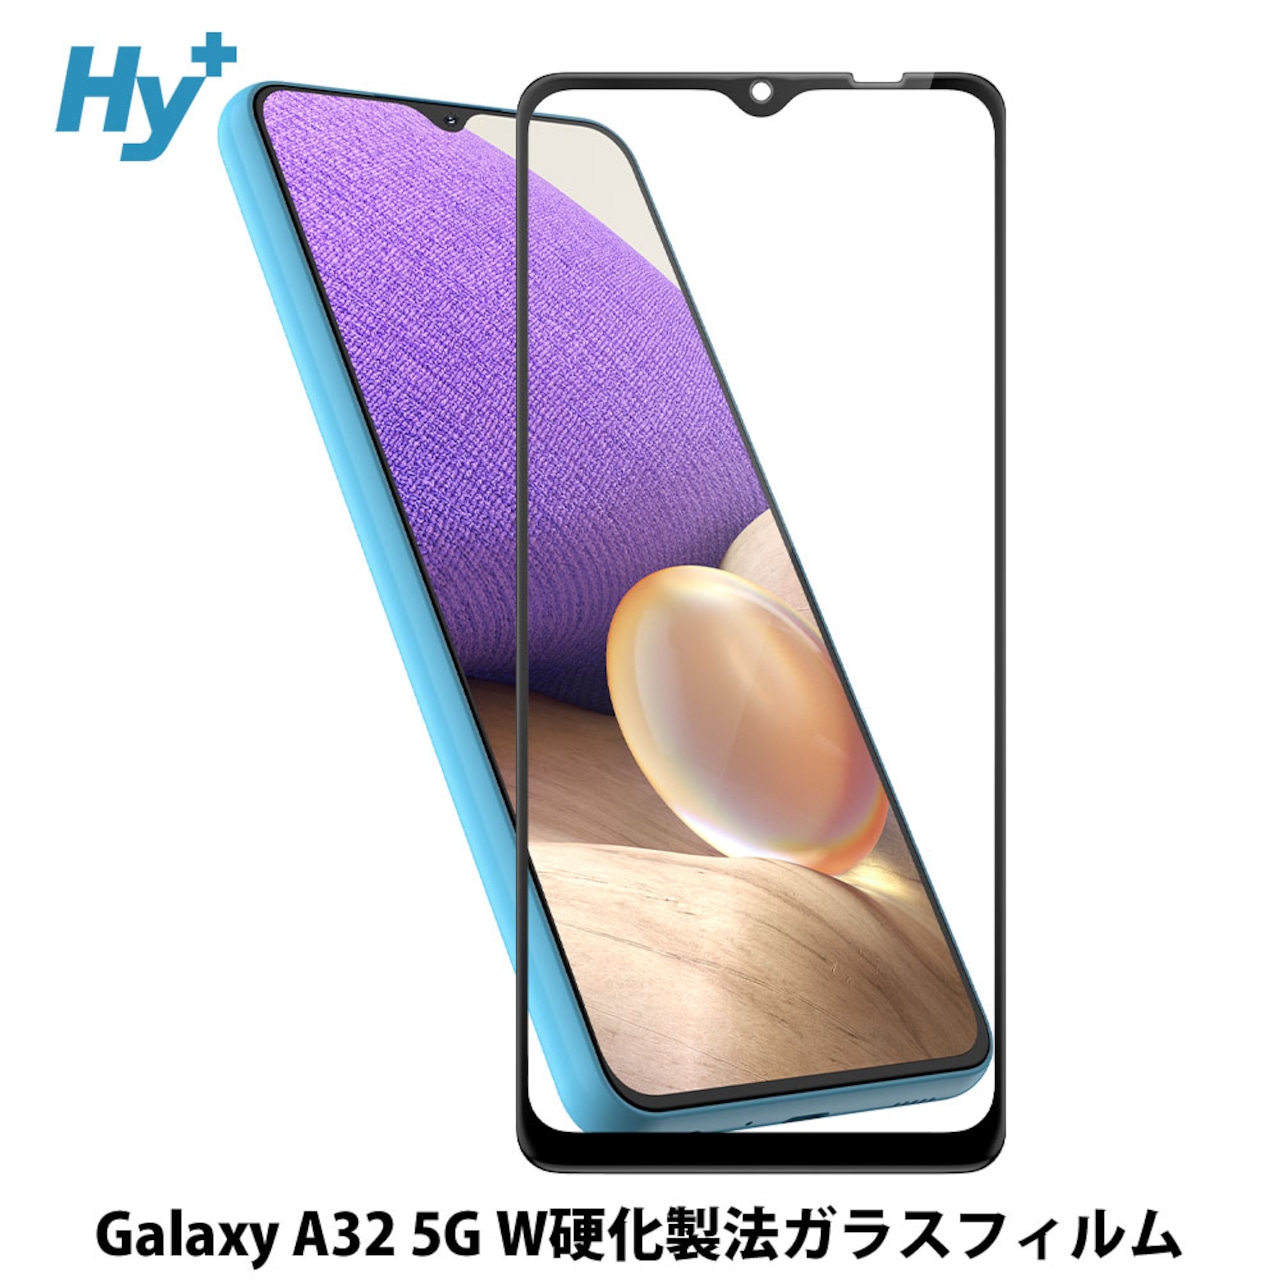 Hy+ Galaxy A32 フィルム SCG08 ガラスフィルム W硬化製法 一般ガラスの3倍強度 全面保護 全面吸着 日本産ガラス使用 厚み0.33mm ブラック